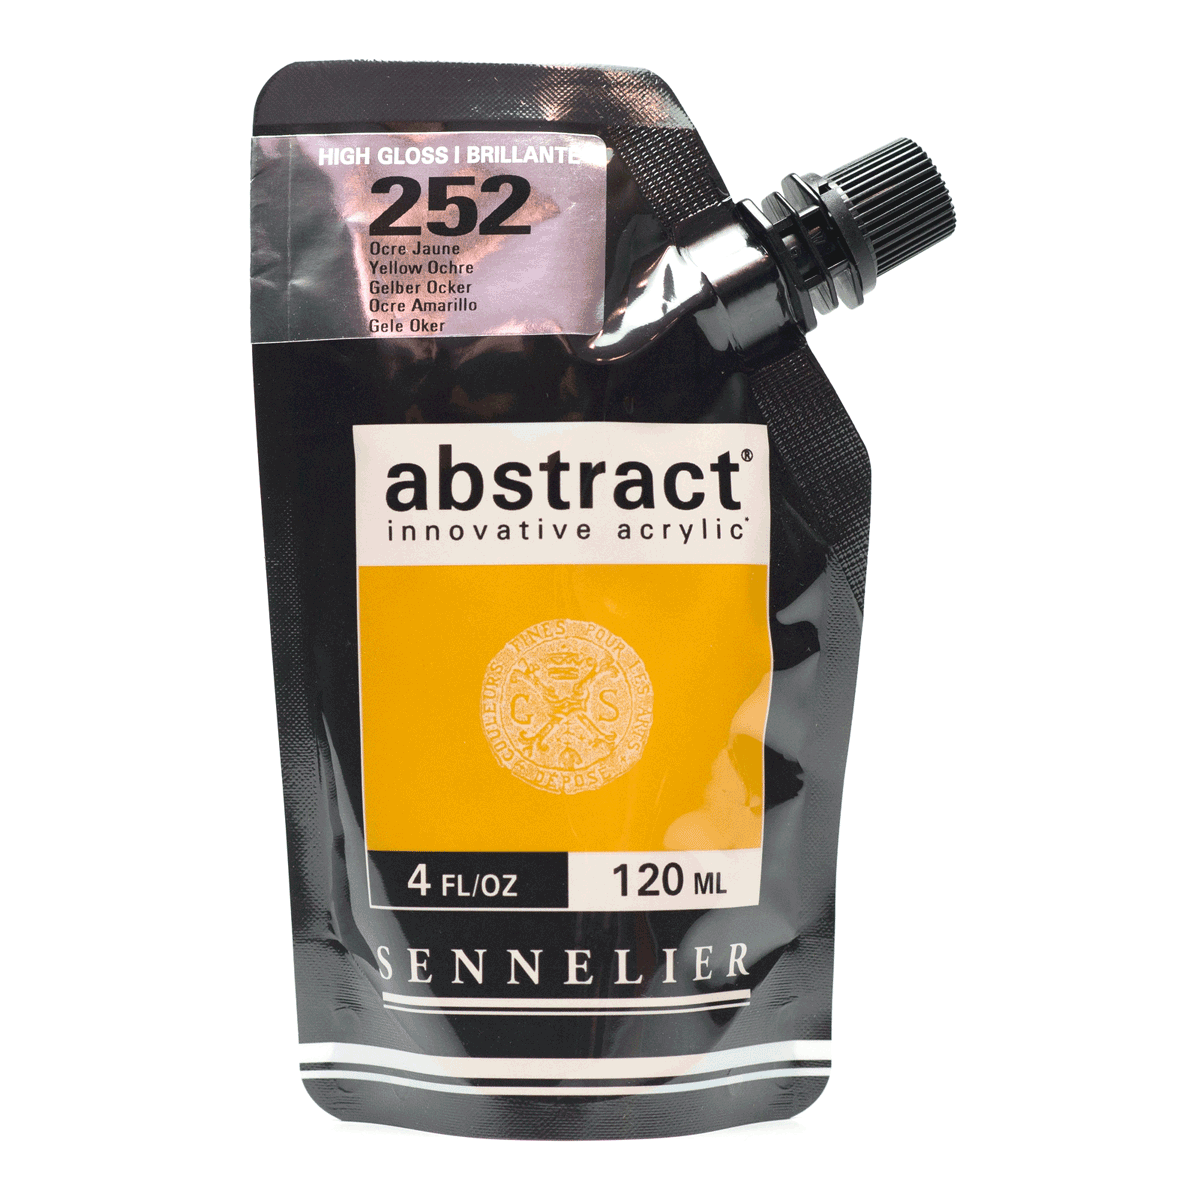 Abstract Acrylic Pouch - High Gloss 252B Yellow Ochre 120ml